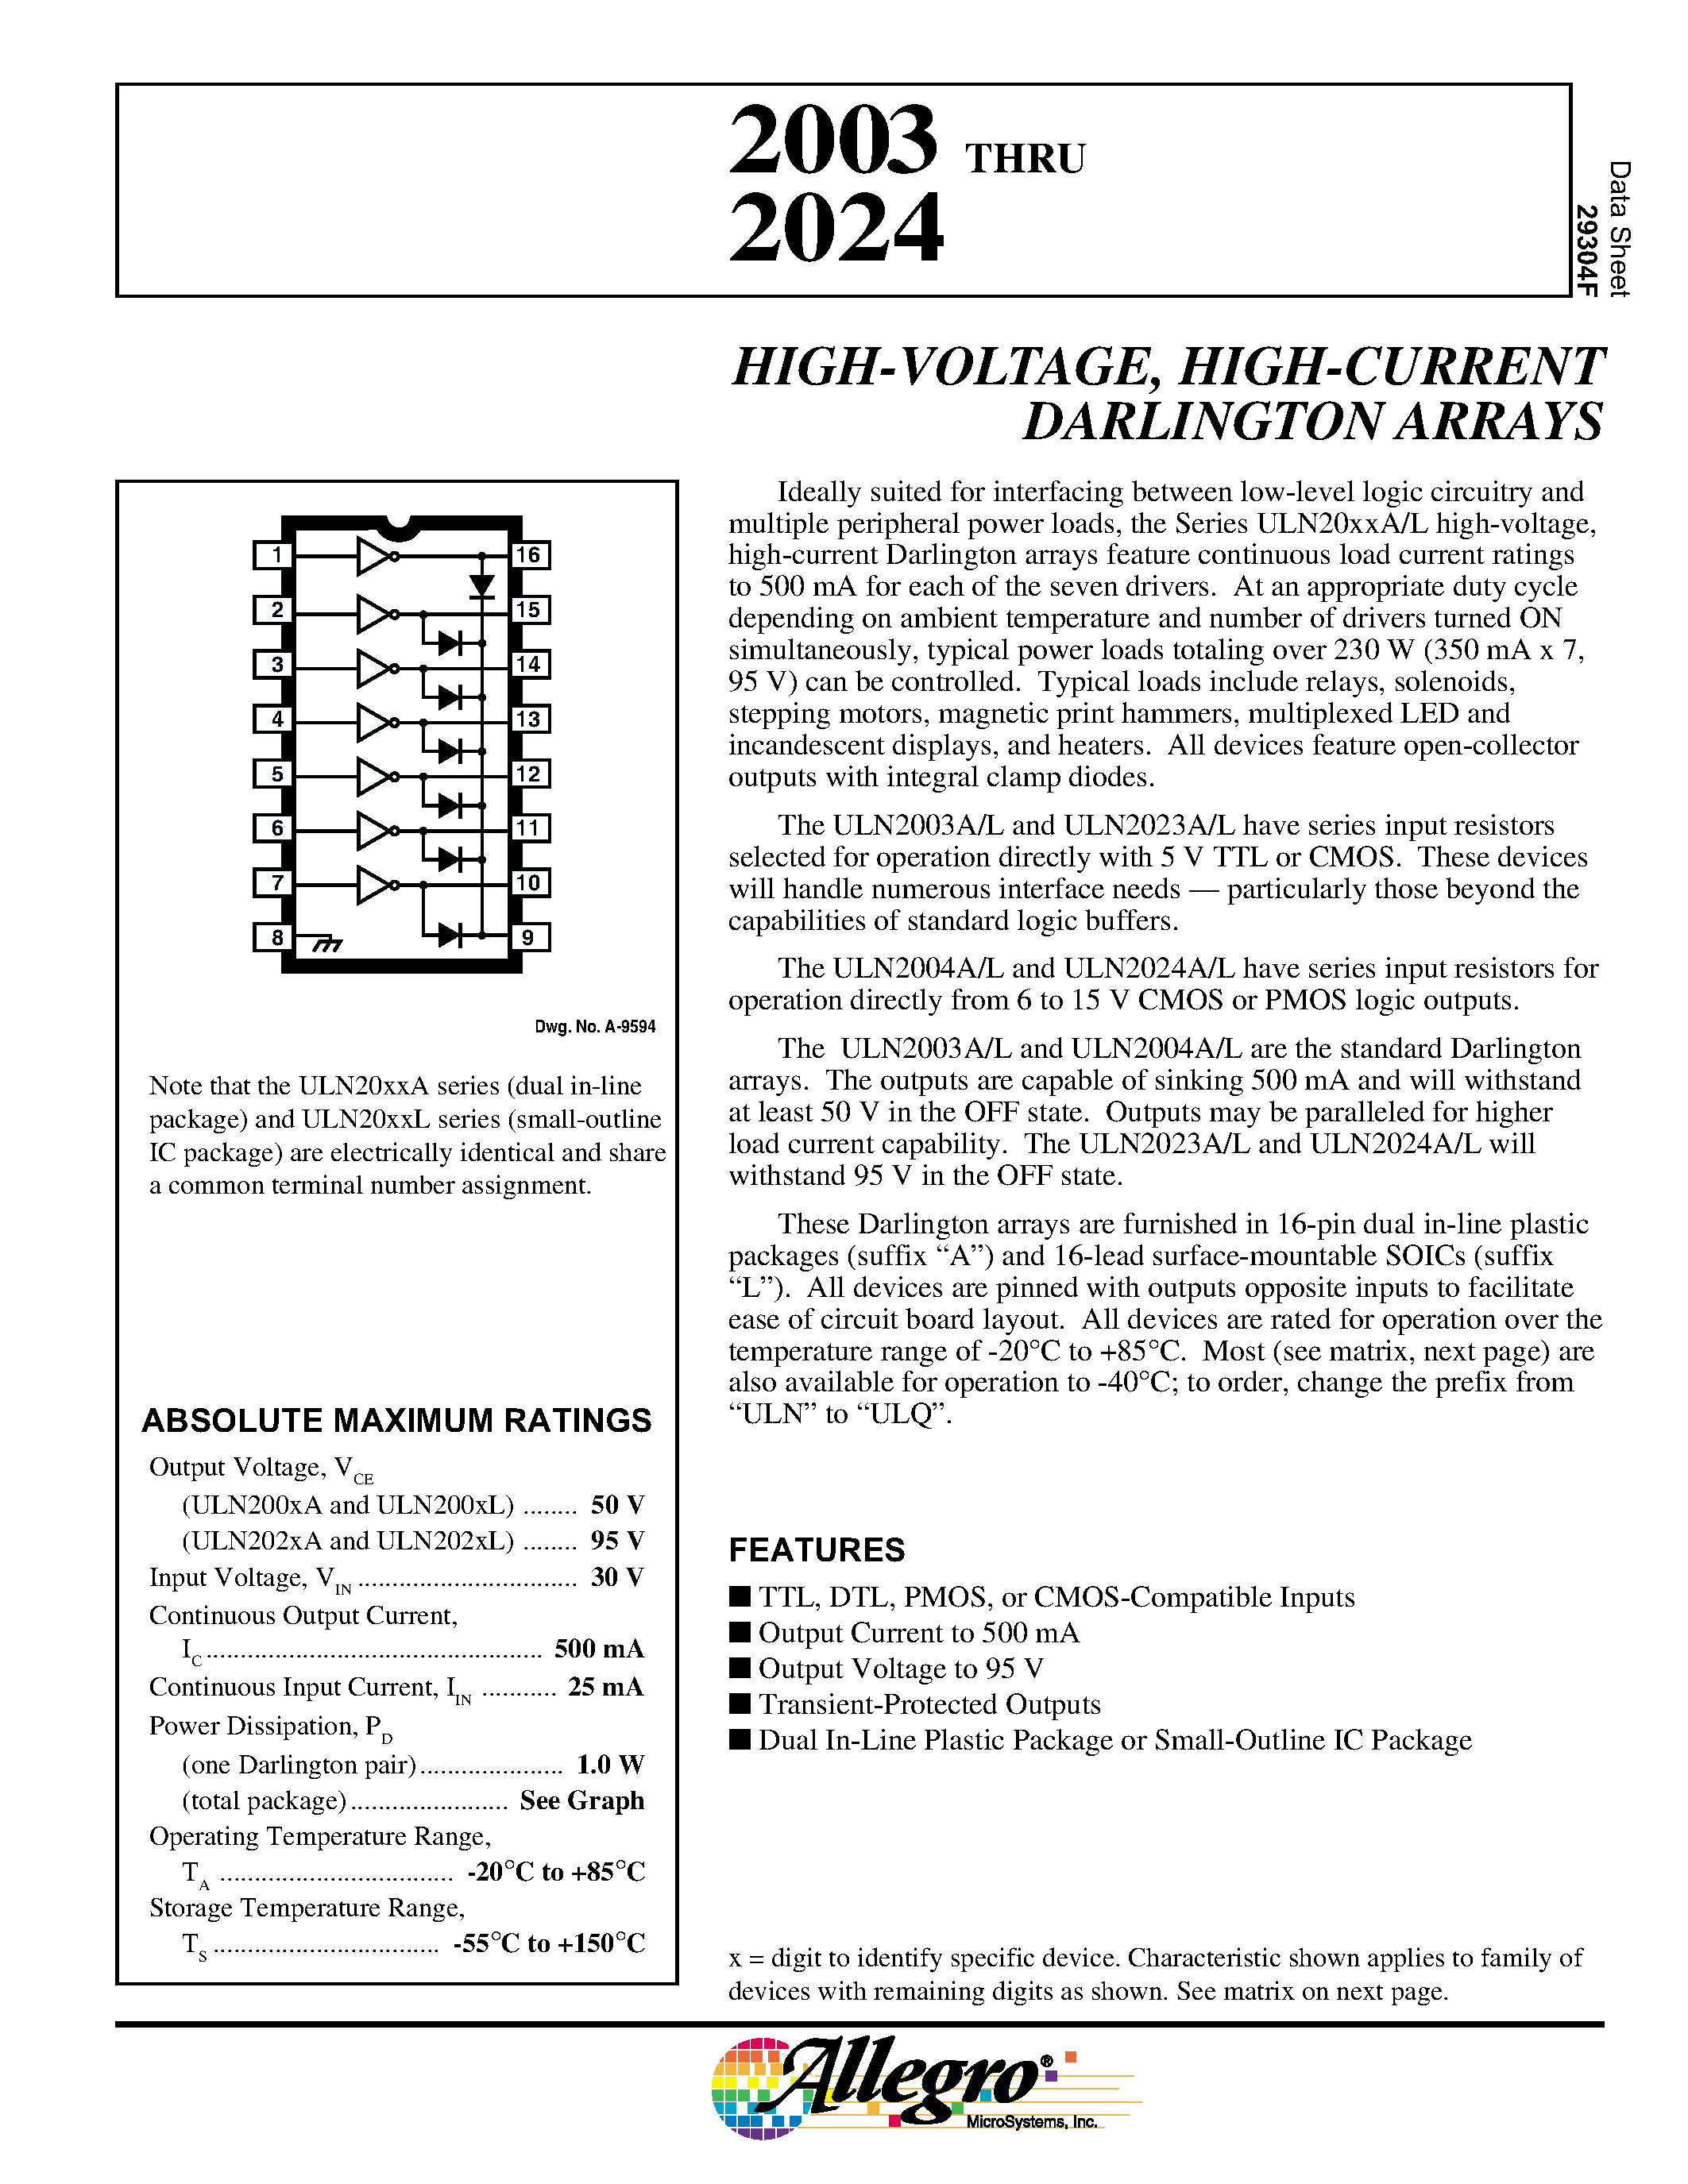 Datasheet ULN2023A - HIGH-VOLTAGE/ HIGH-CURRENT DARLINGTON ARRAYS page 1